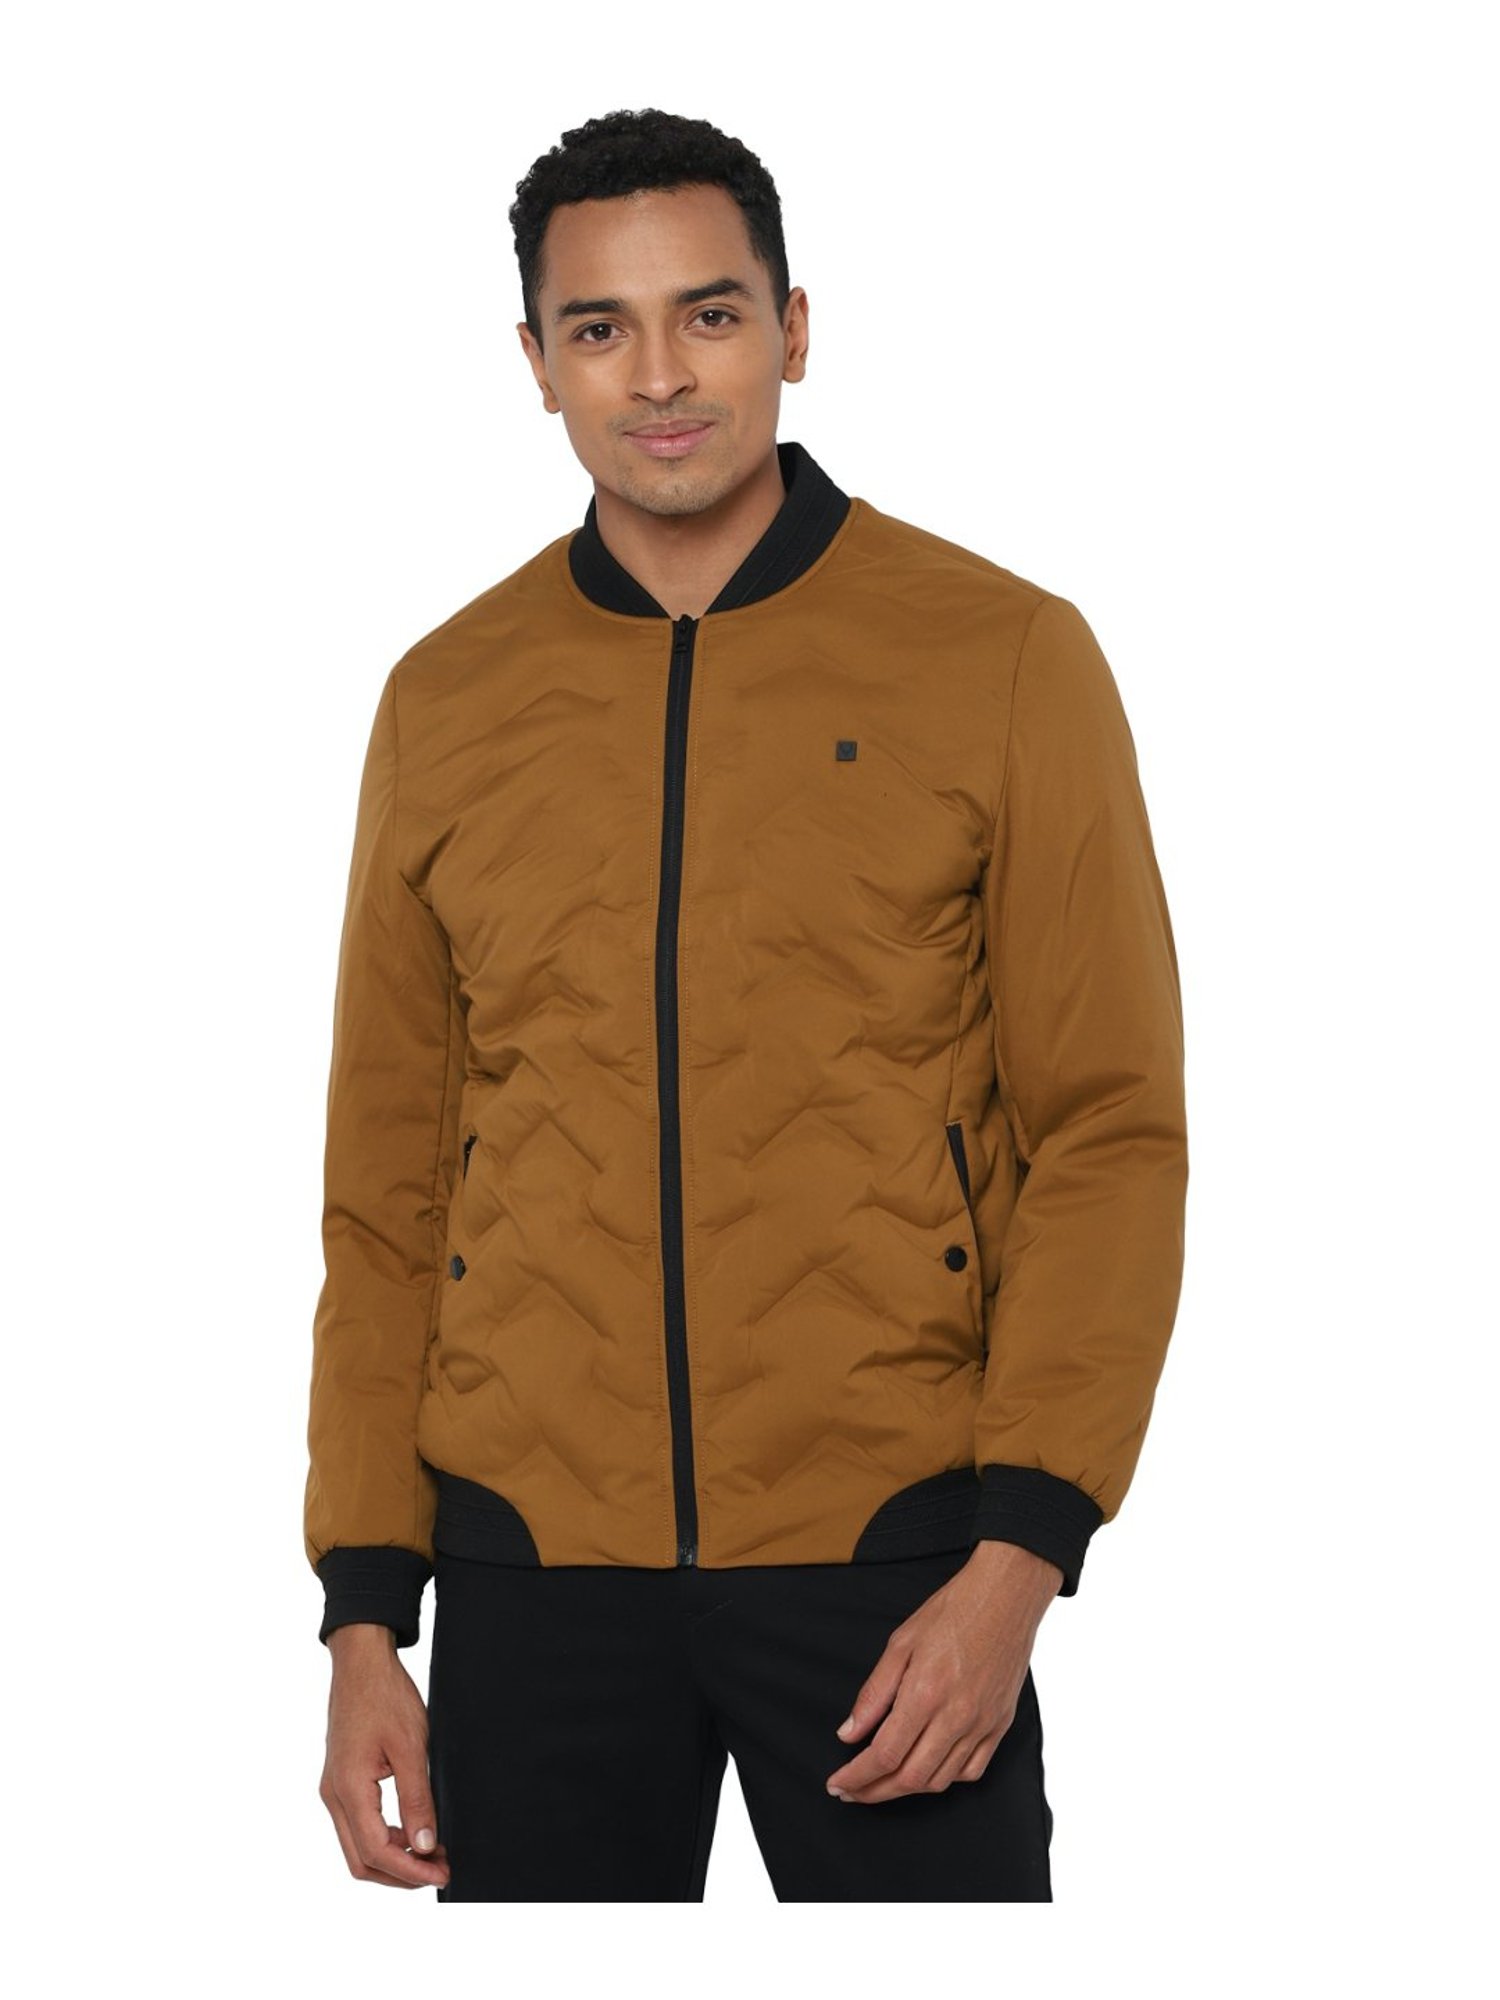 Allen Solly blazer jacket | Blazer jacket, Colored blazer, Jackets